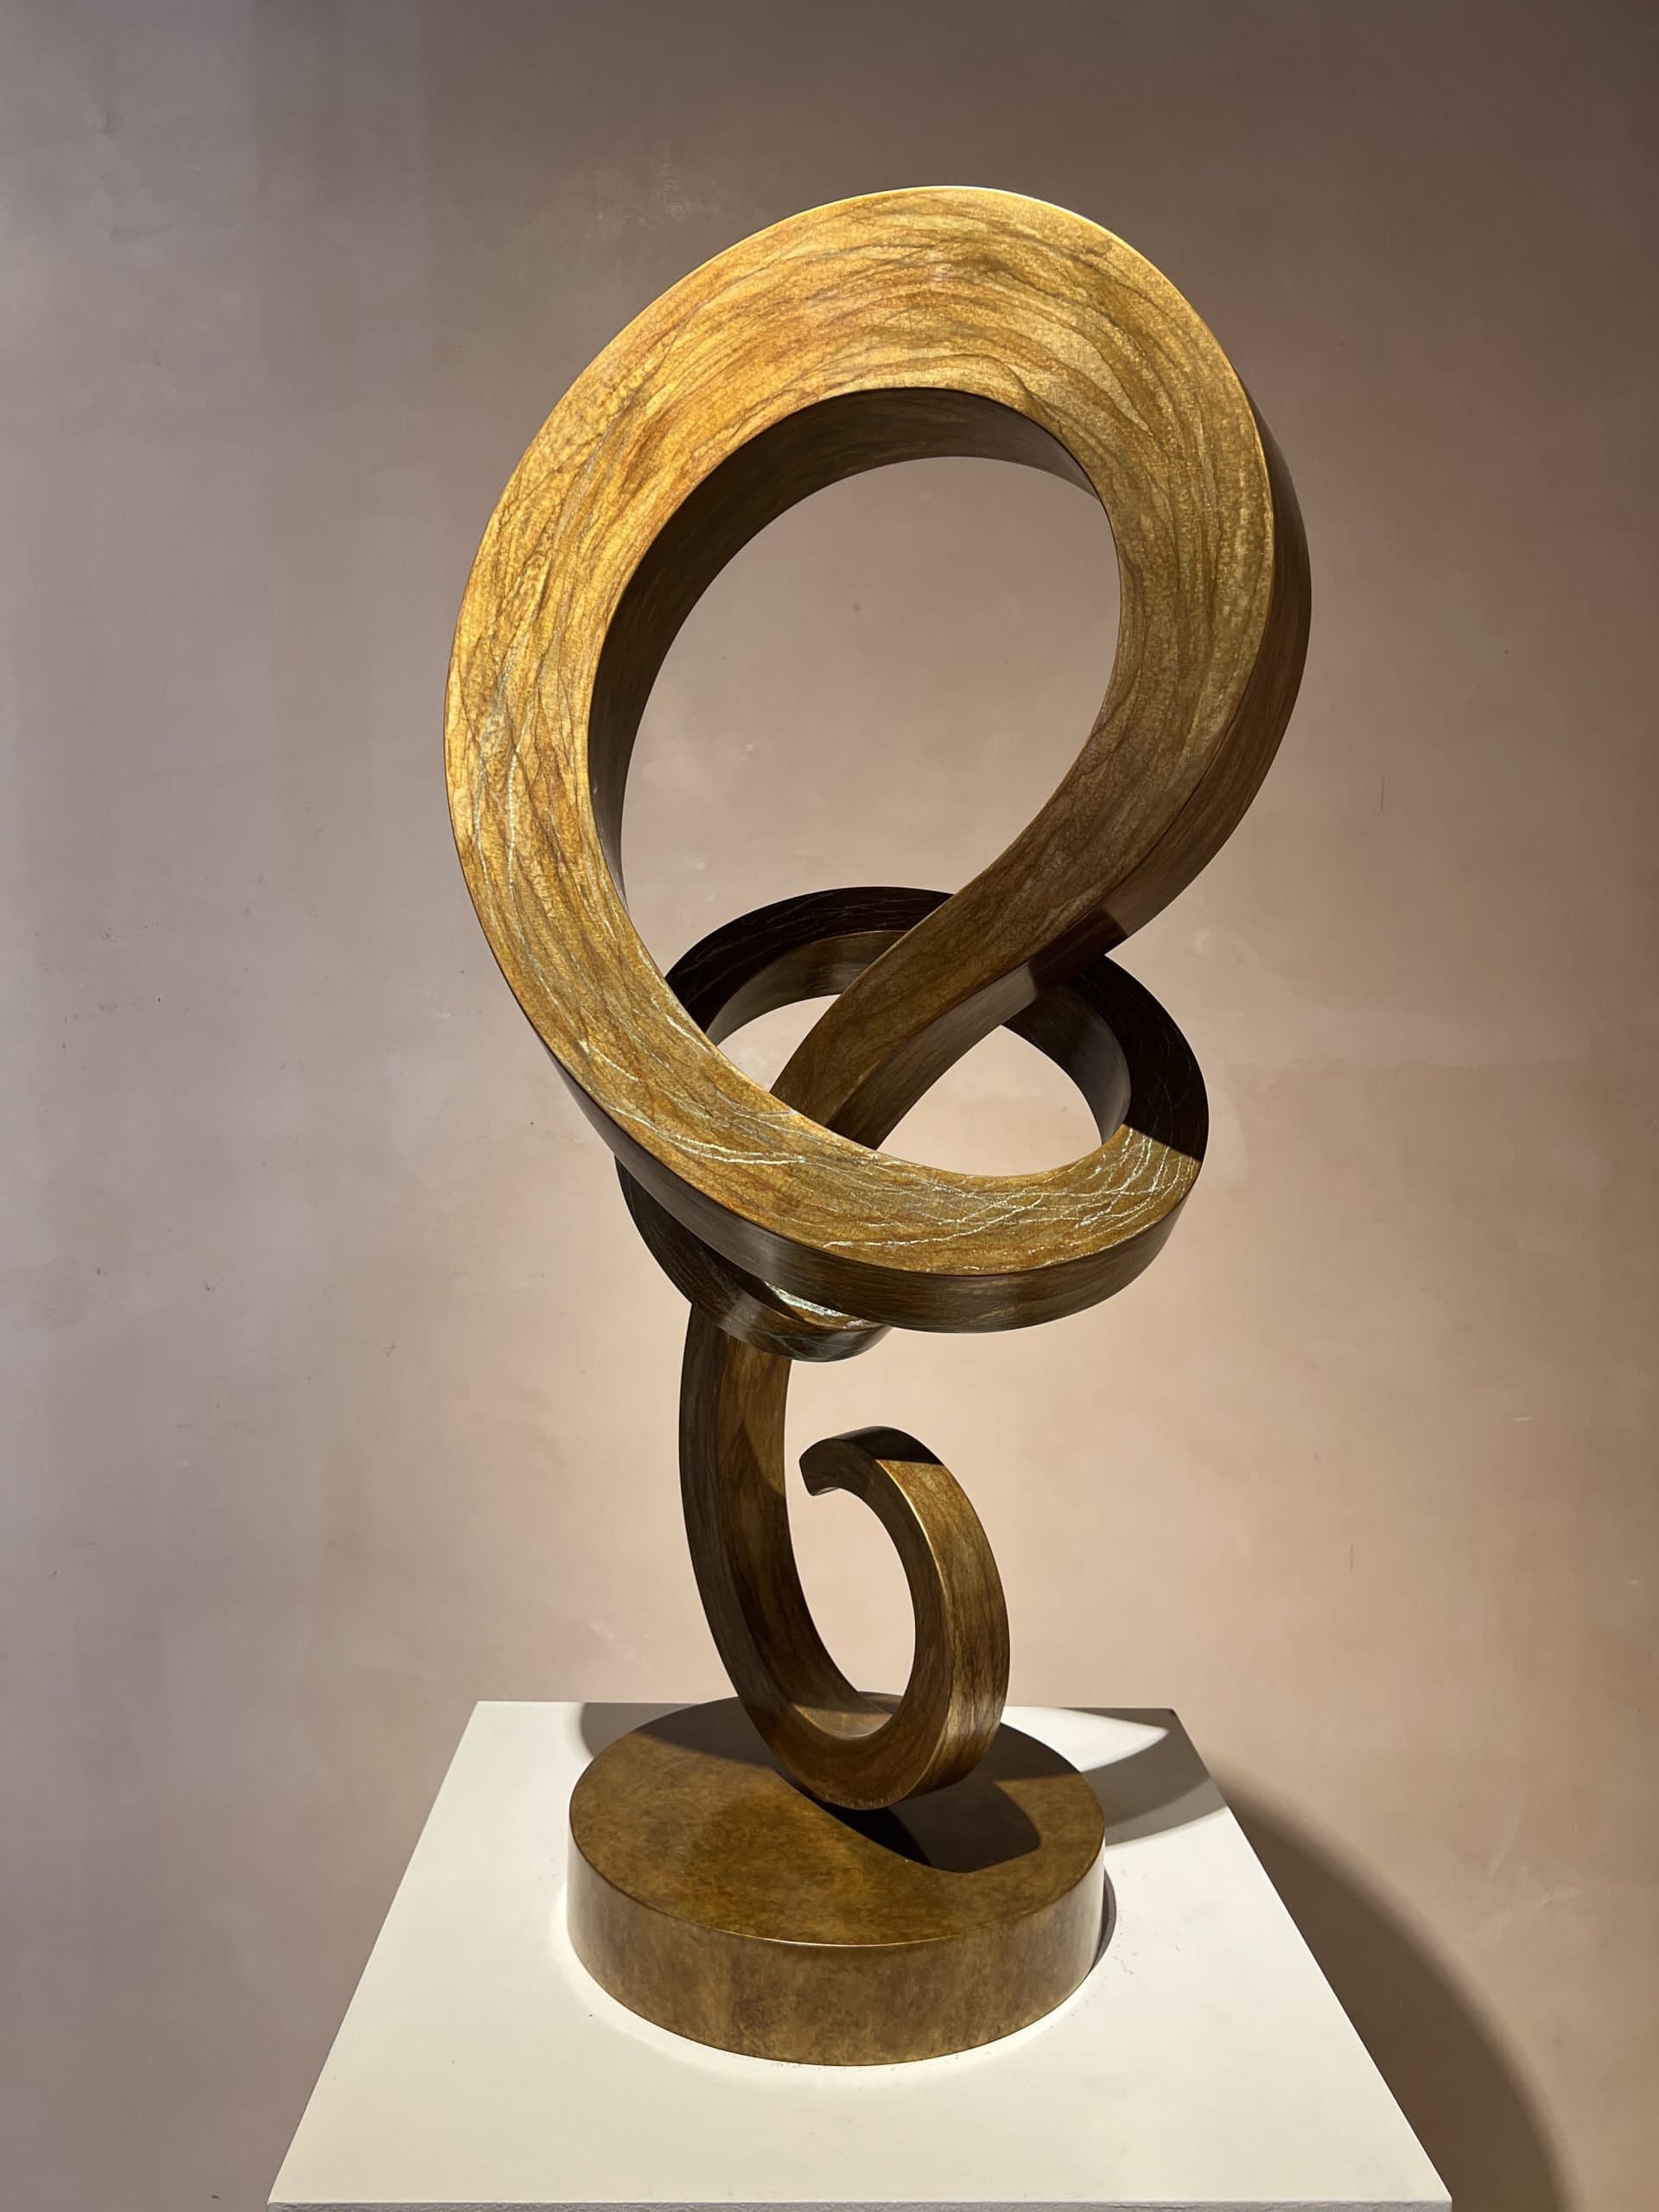 abstract swirl sculpture